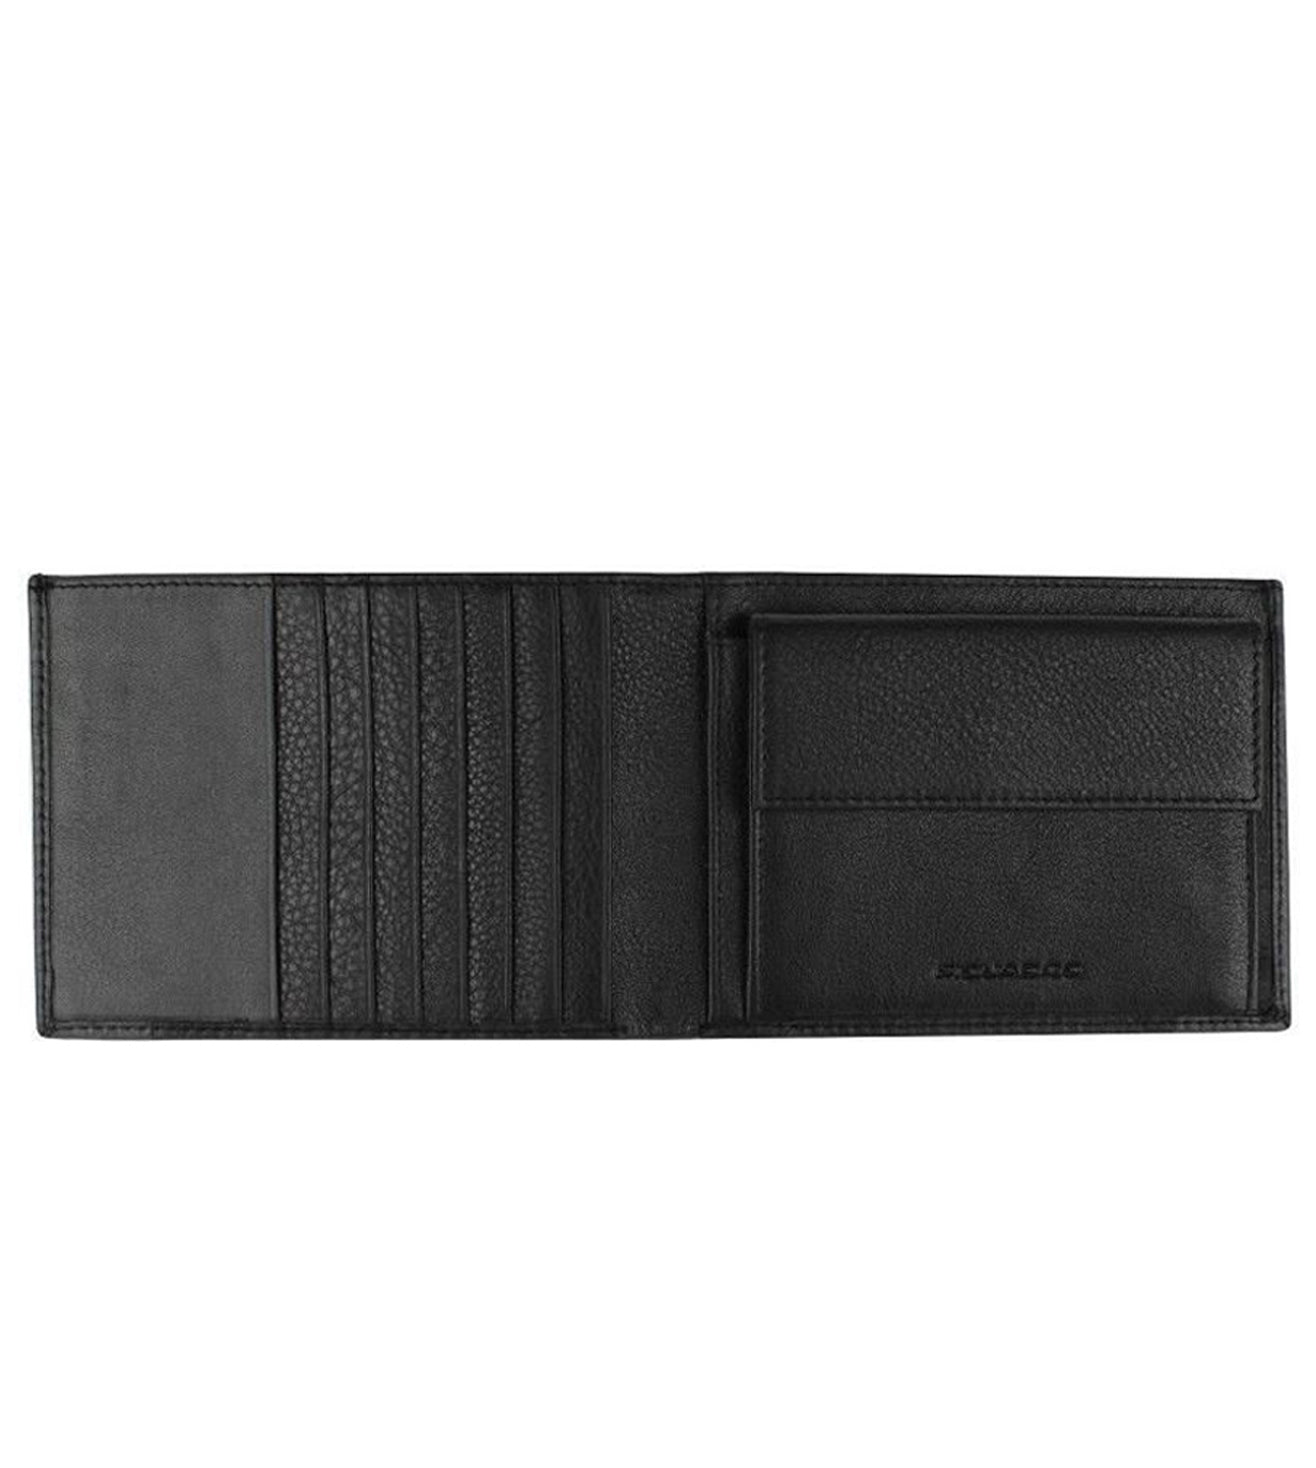 Piquadro Pulse Men's Wallet